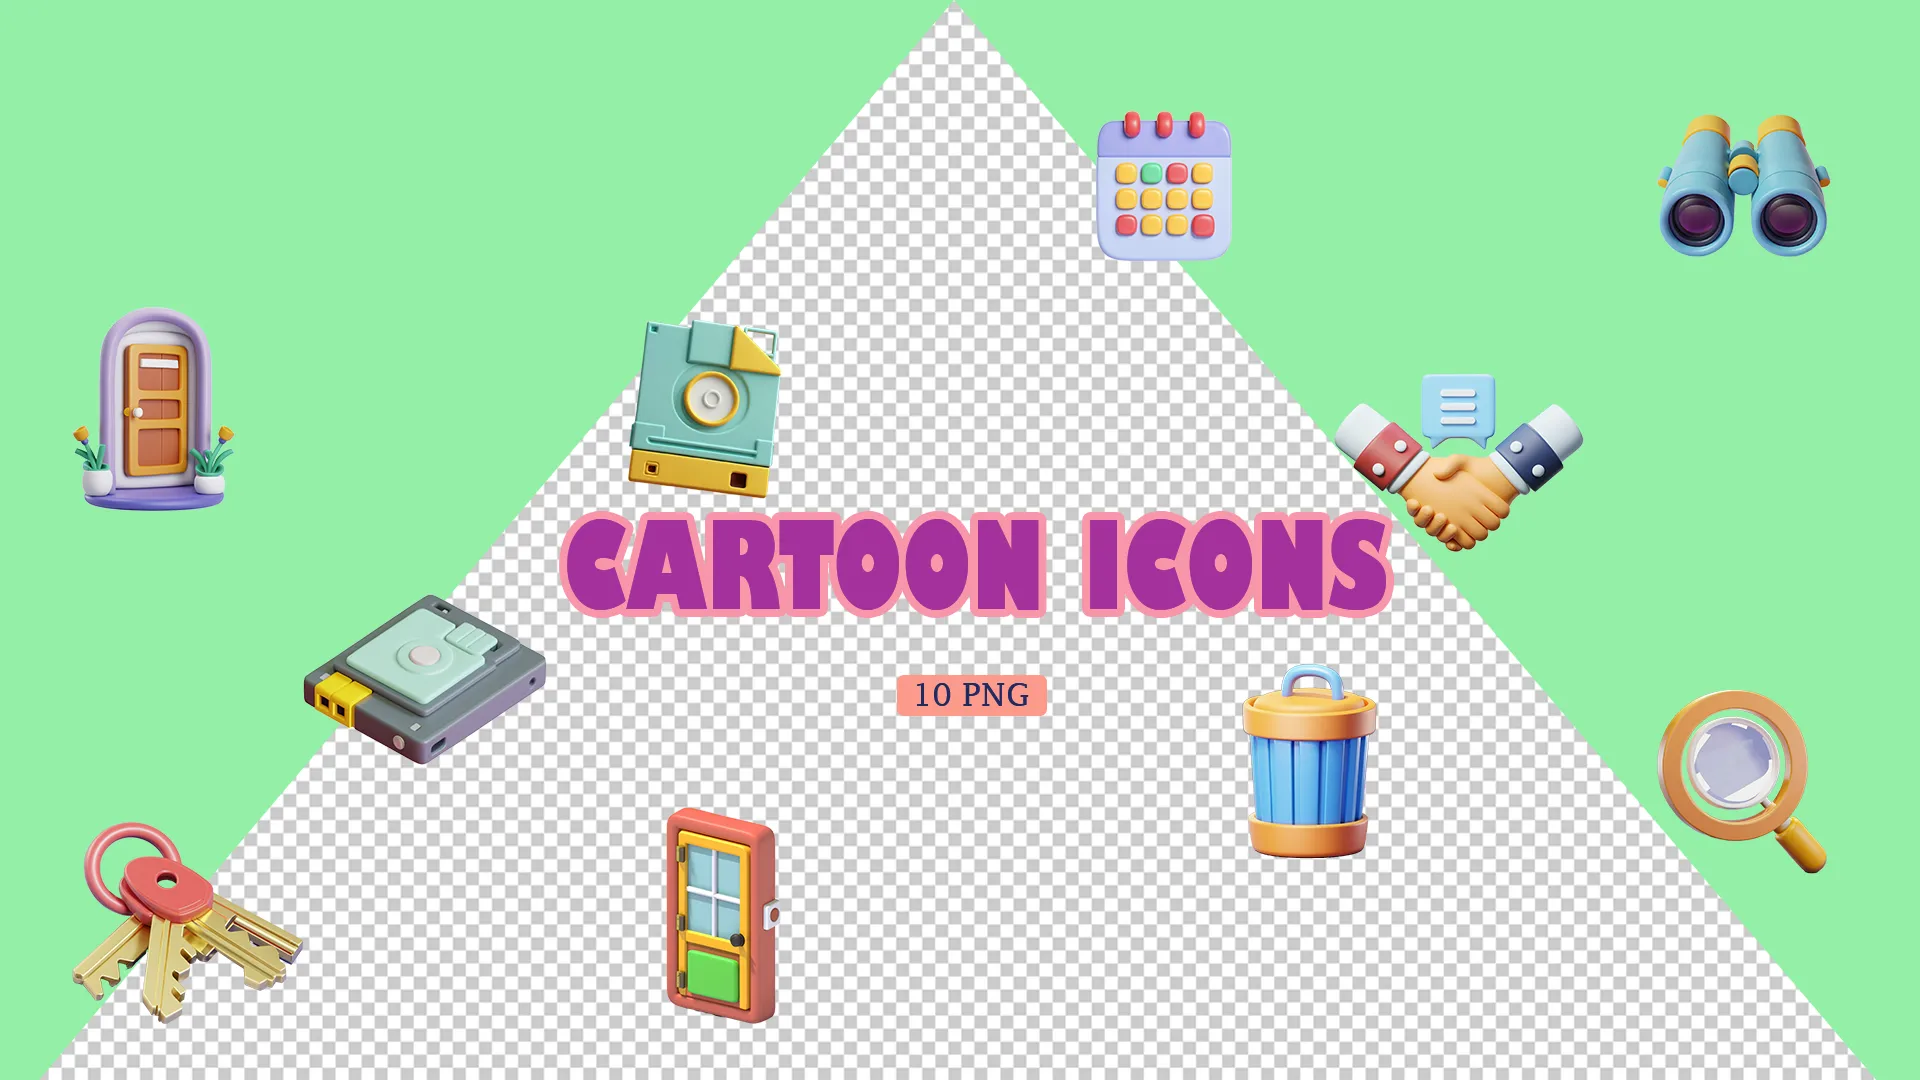 Playful Cartoon Icons Bundle image